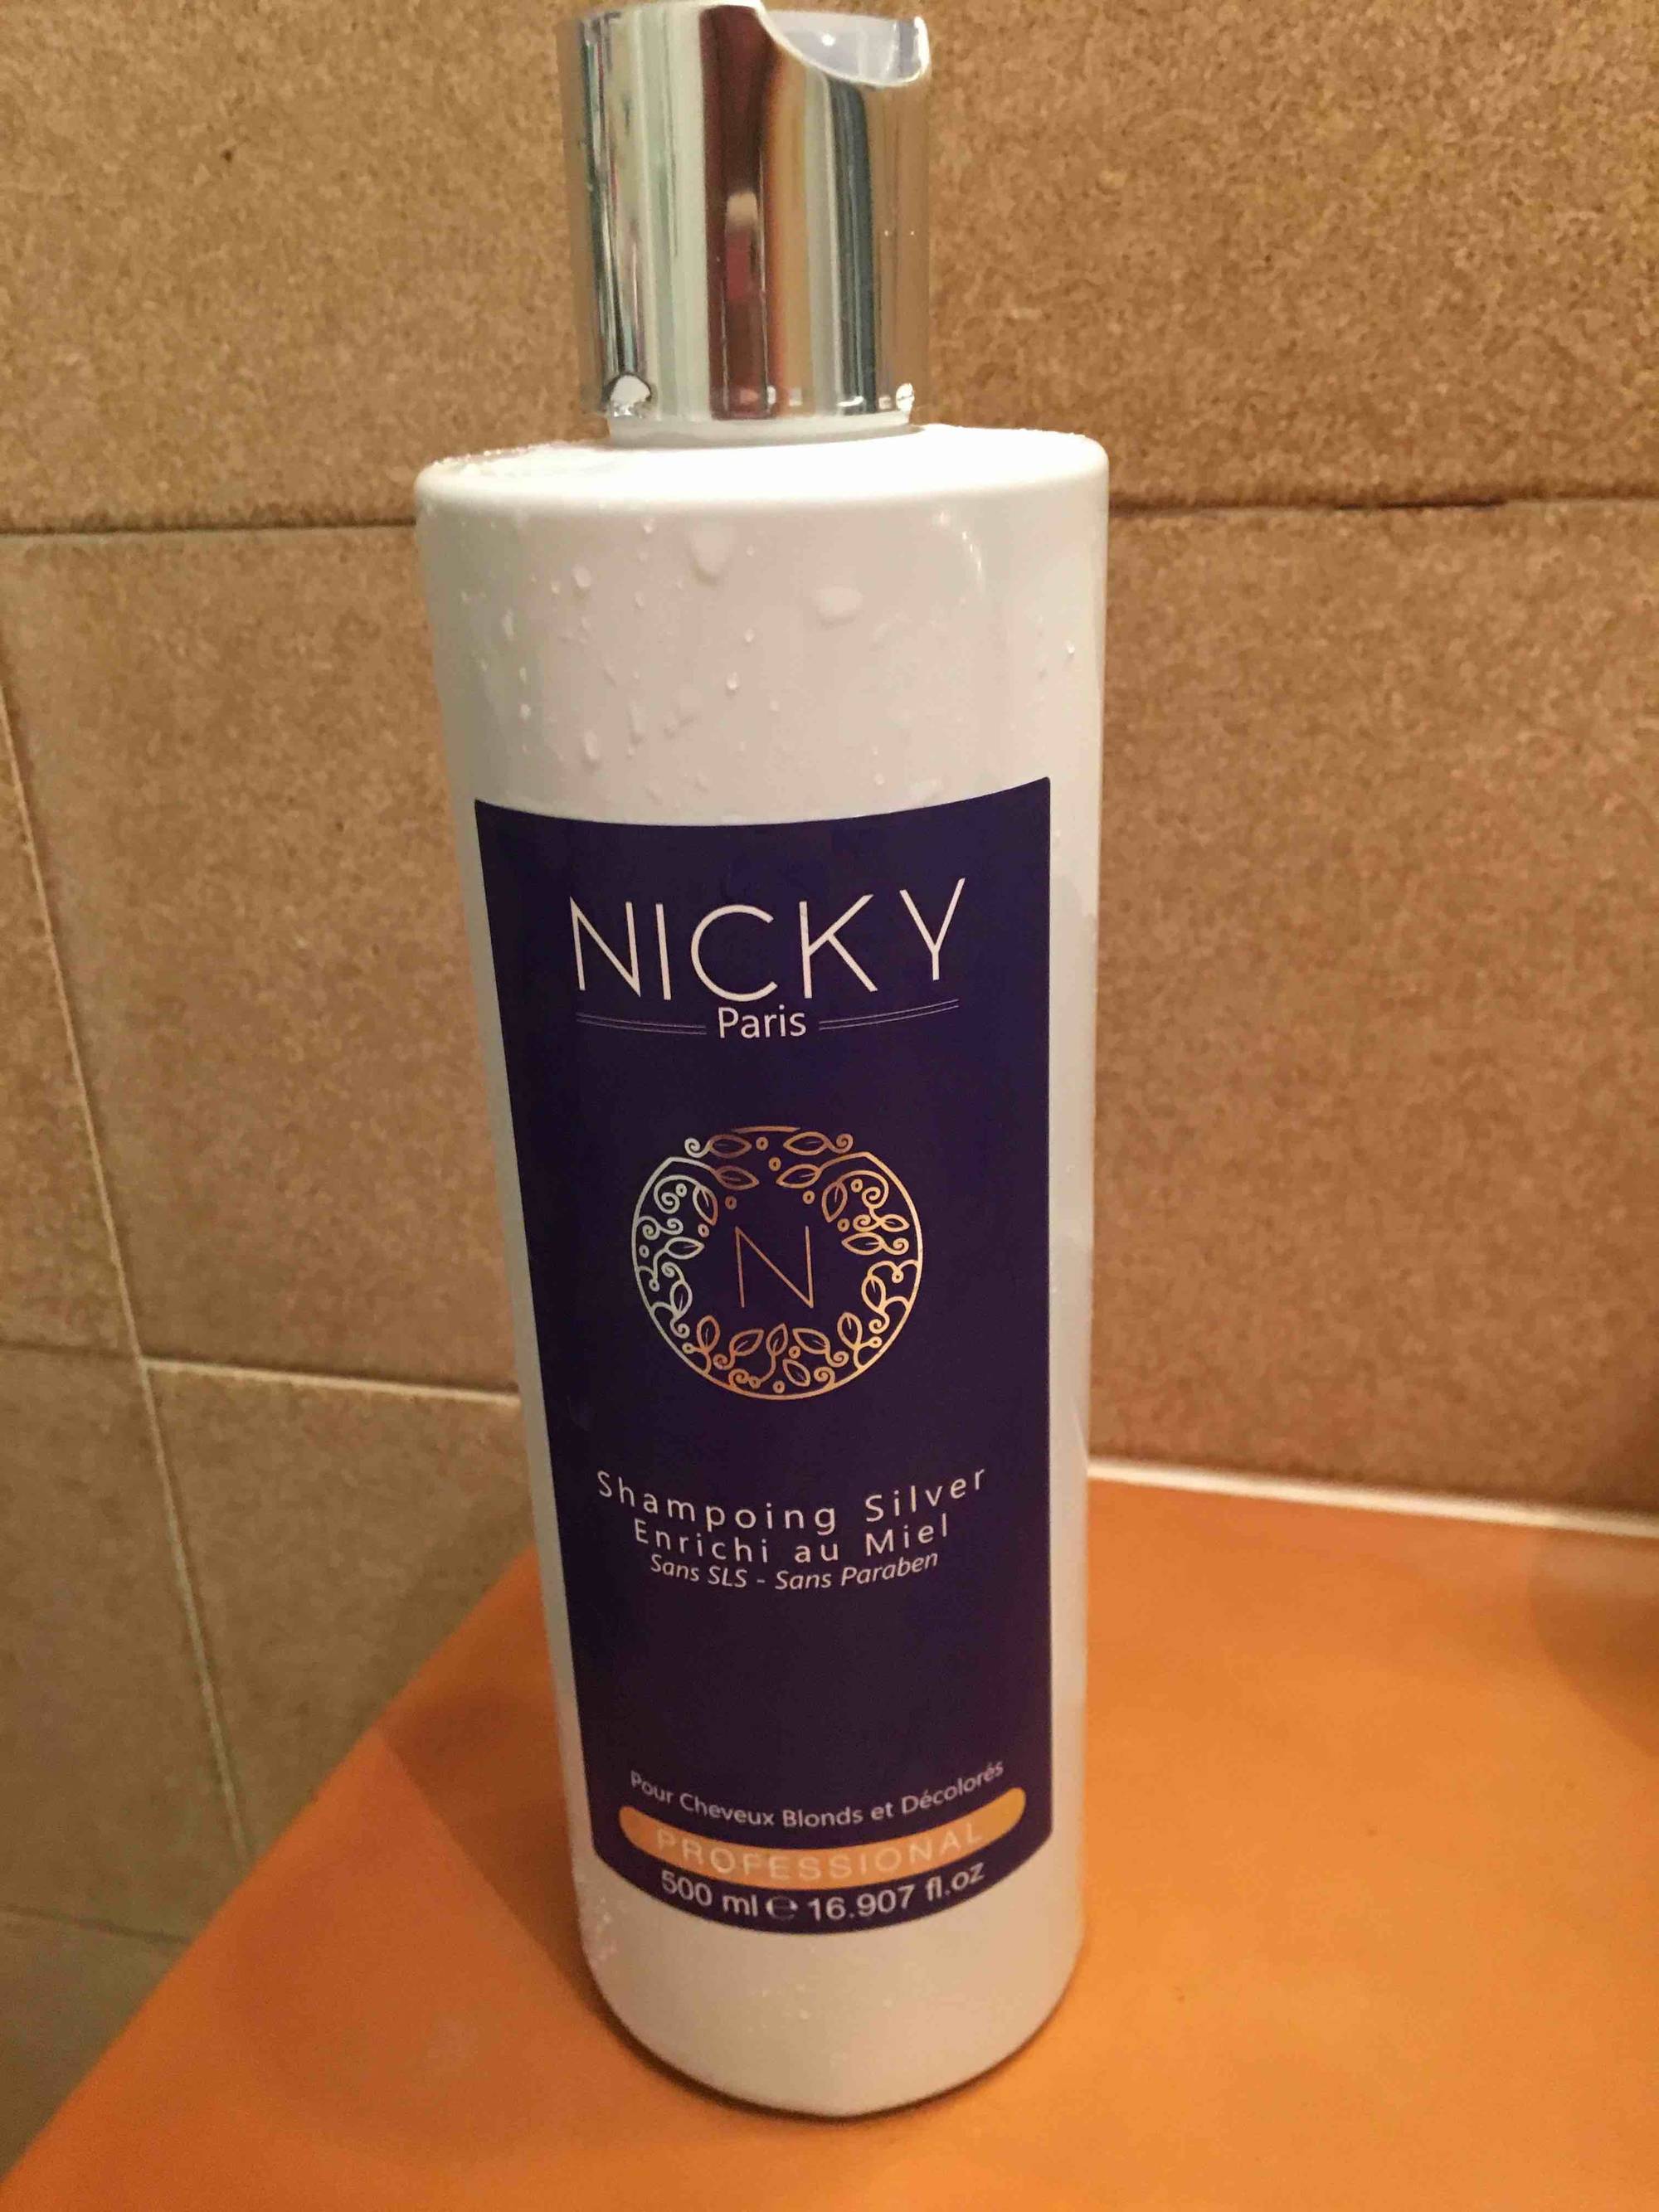 NICKY PARIS - Shampoing silver Enrichi au Miel